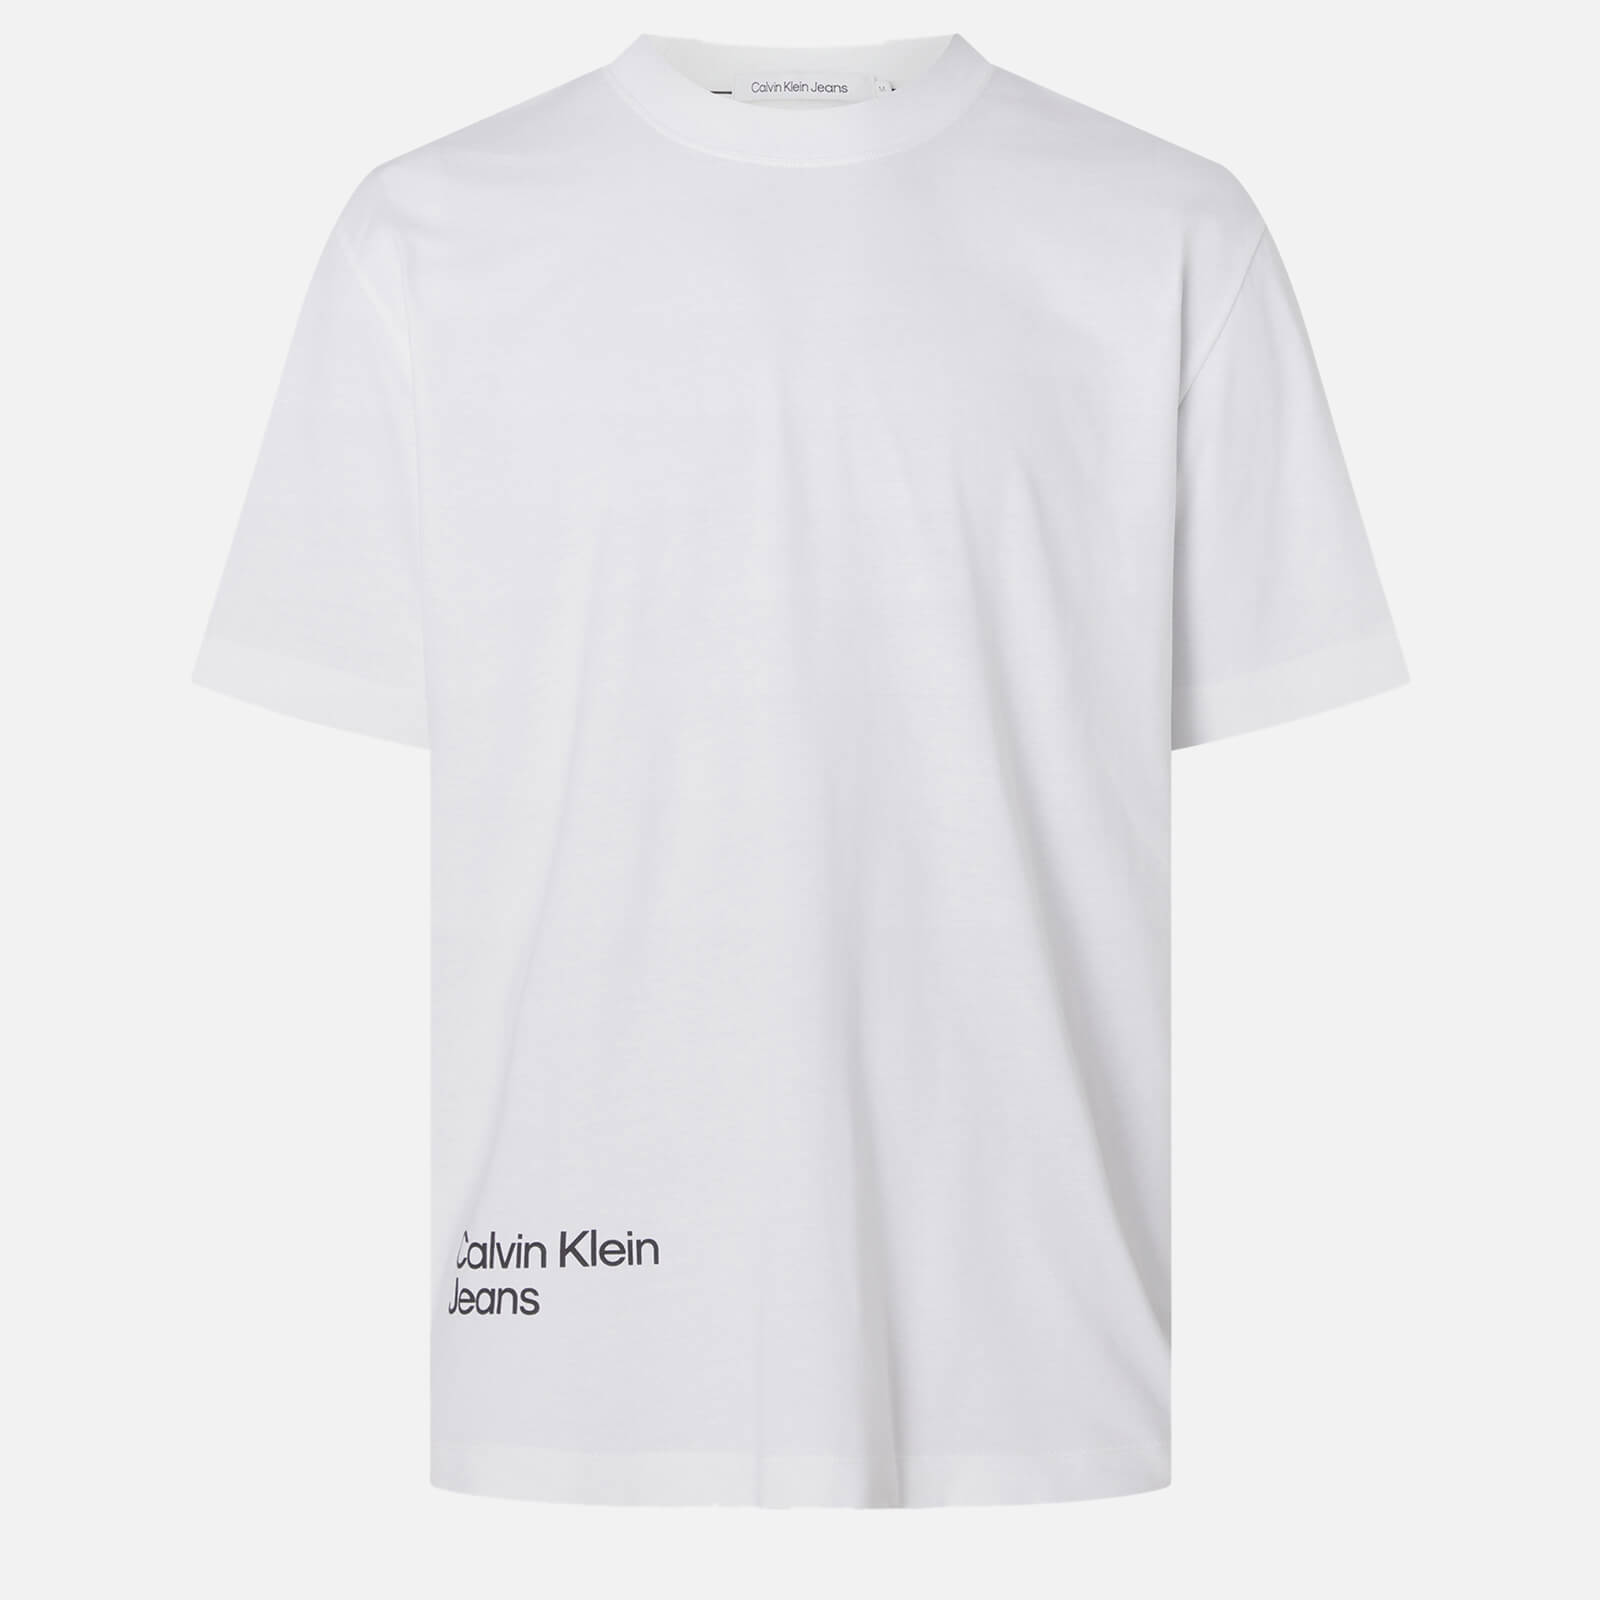 Calvin Klein Jeans Blurred Graphic Cotton T-Shirt